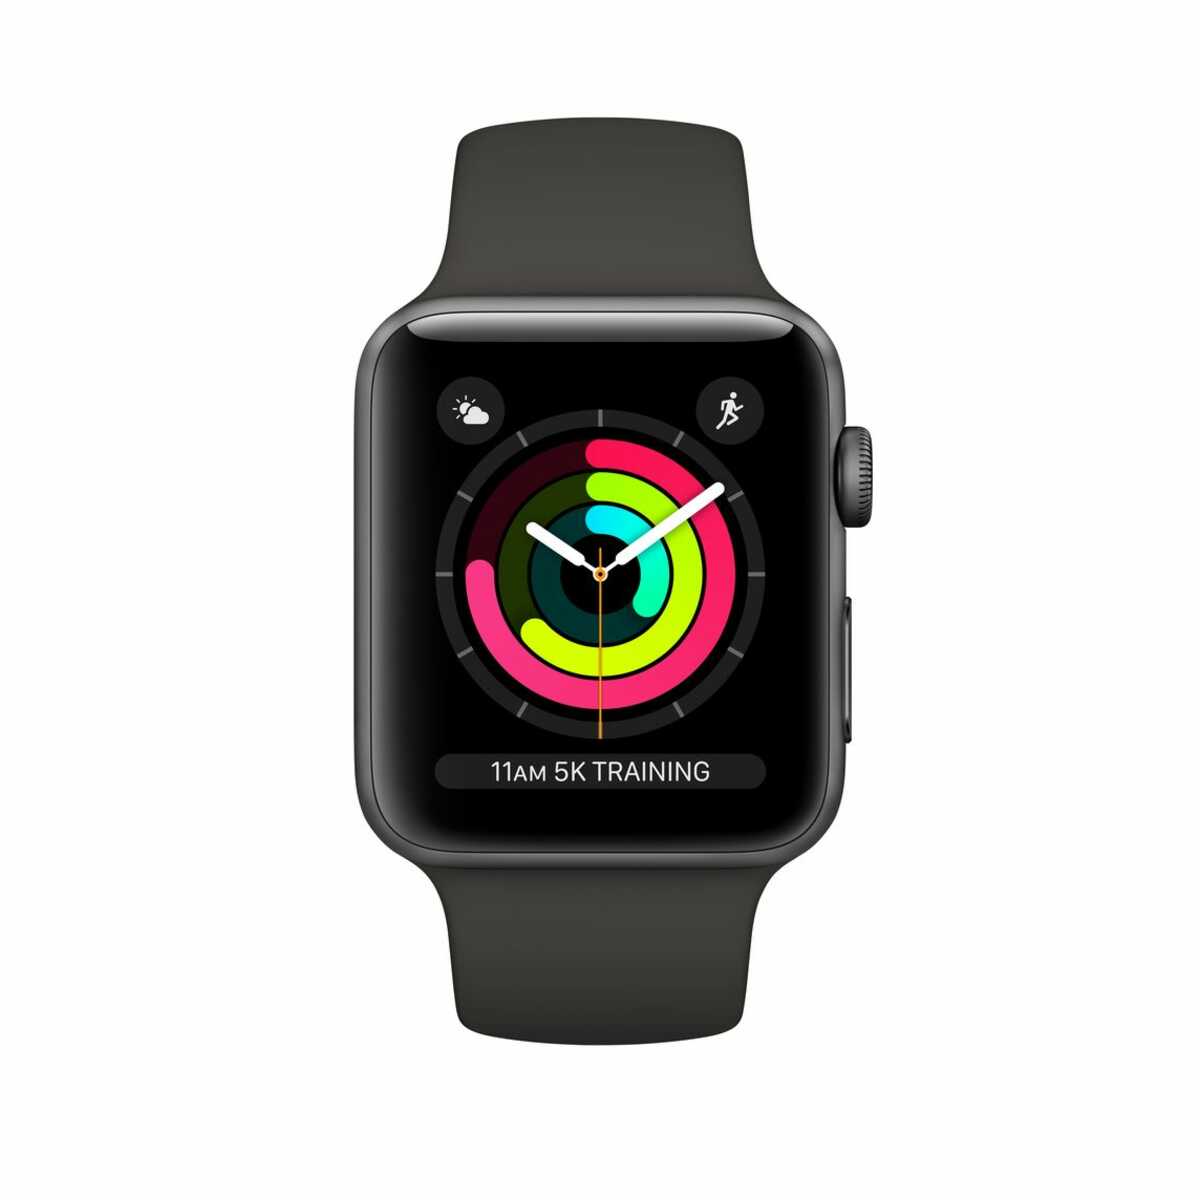 Apple Watch Series 3 – Space Grey